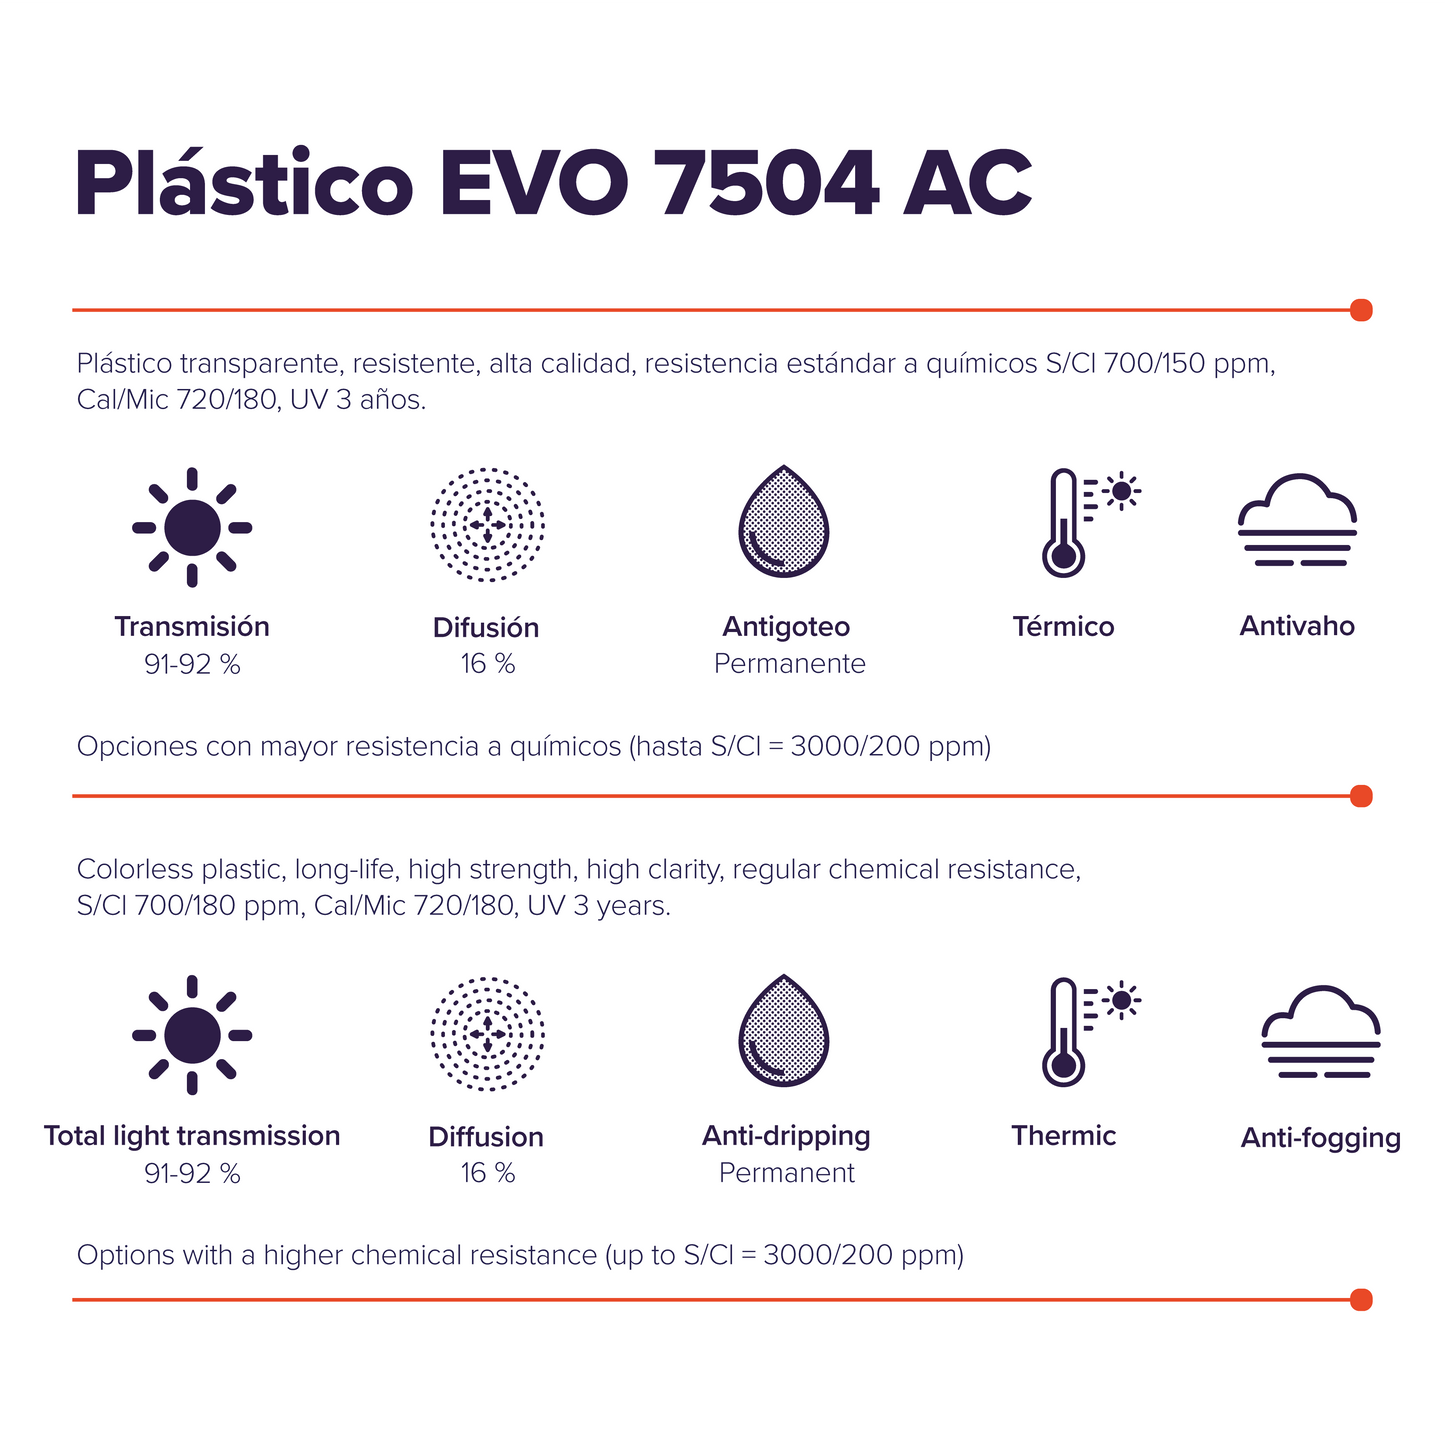 Plastic EVO 7504 AC